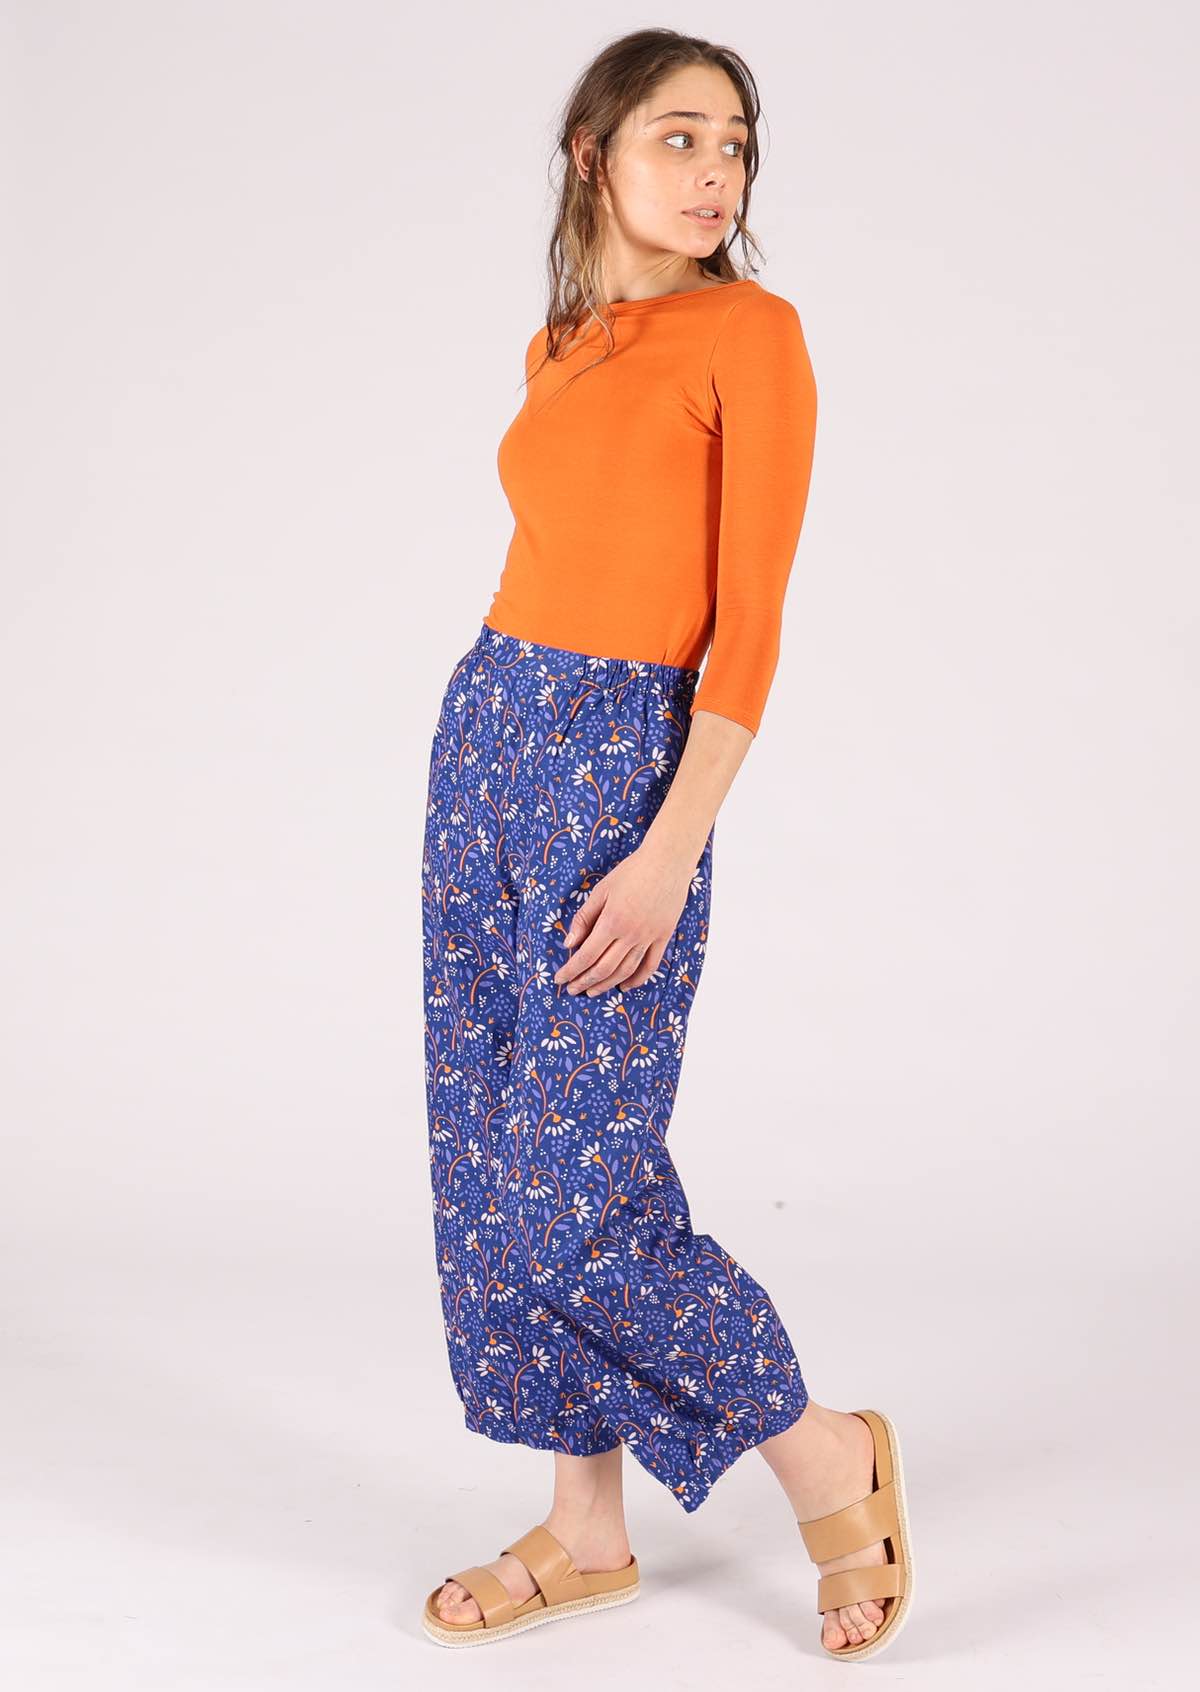 Fun orange and white daisy print on blue vivid base cotton pants